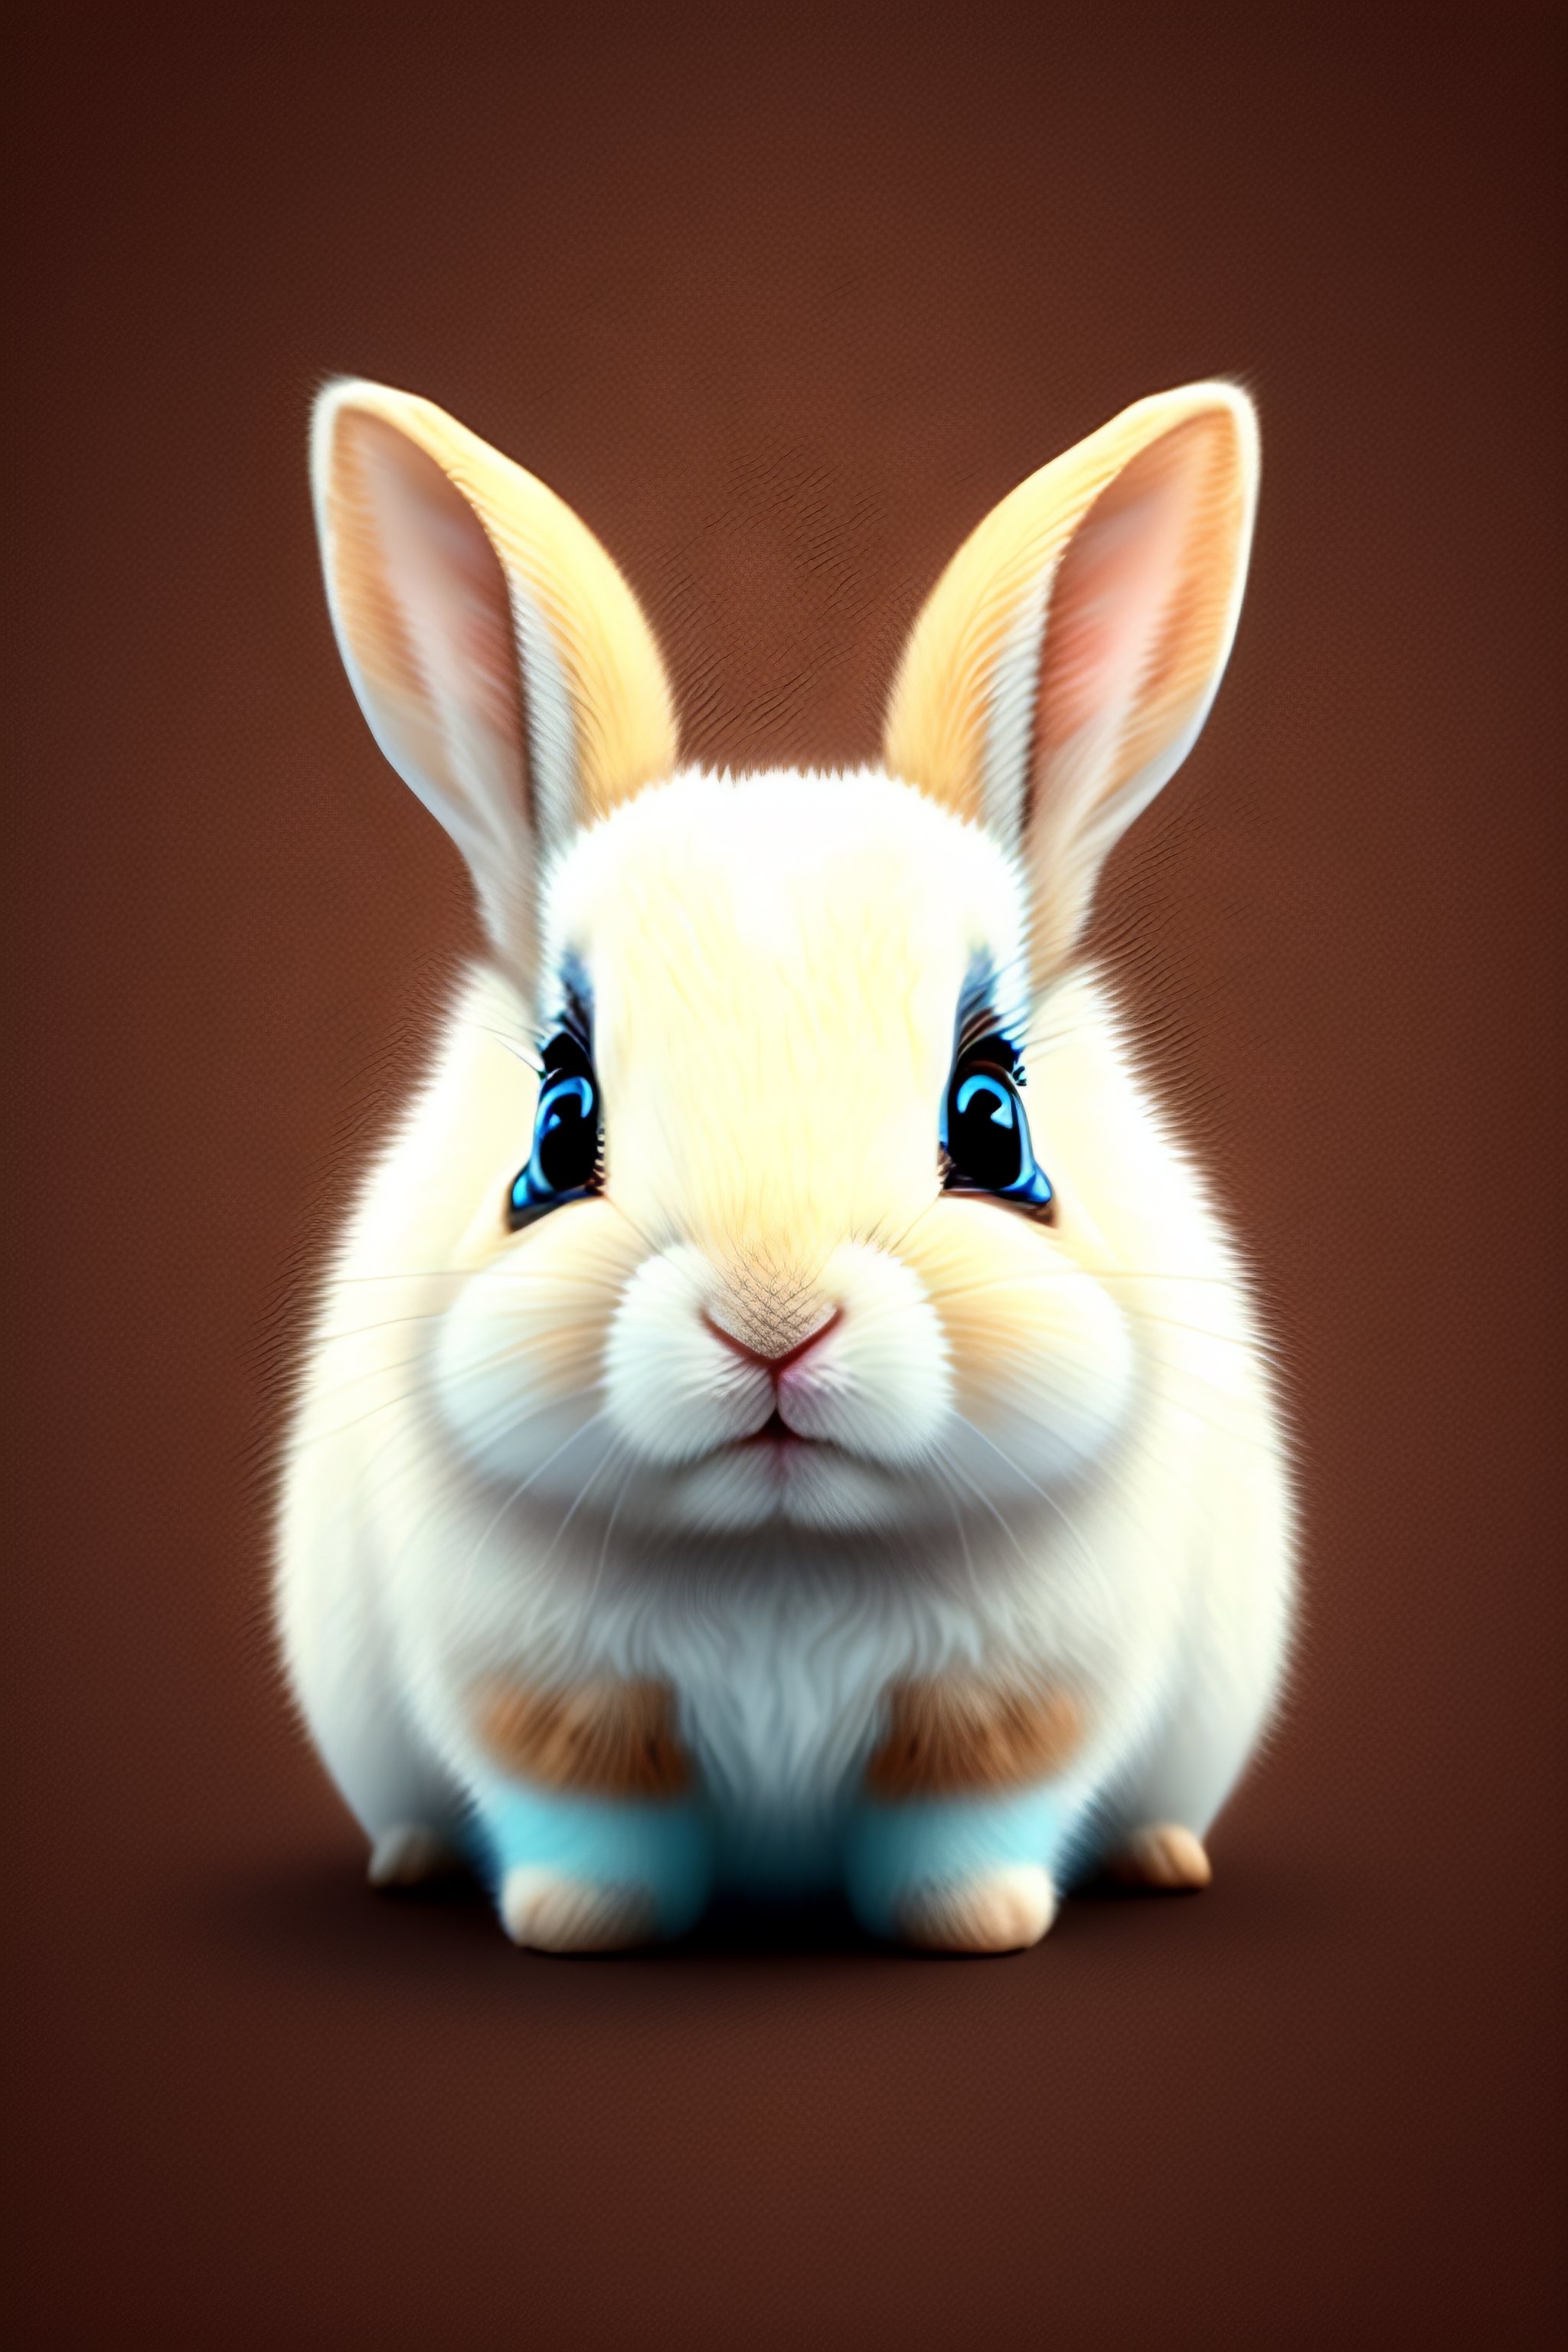 cute baby bunny cartoon